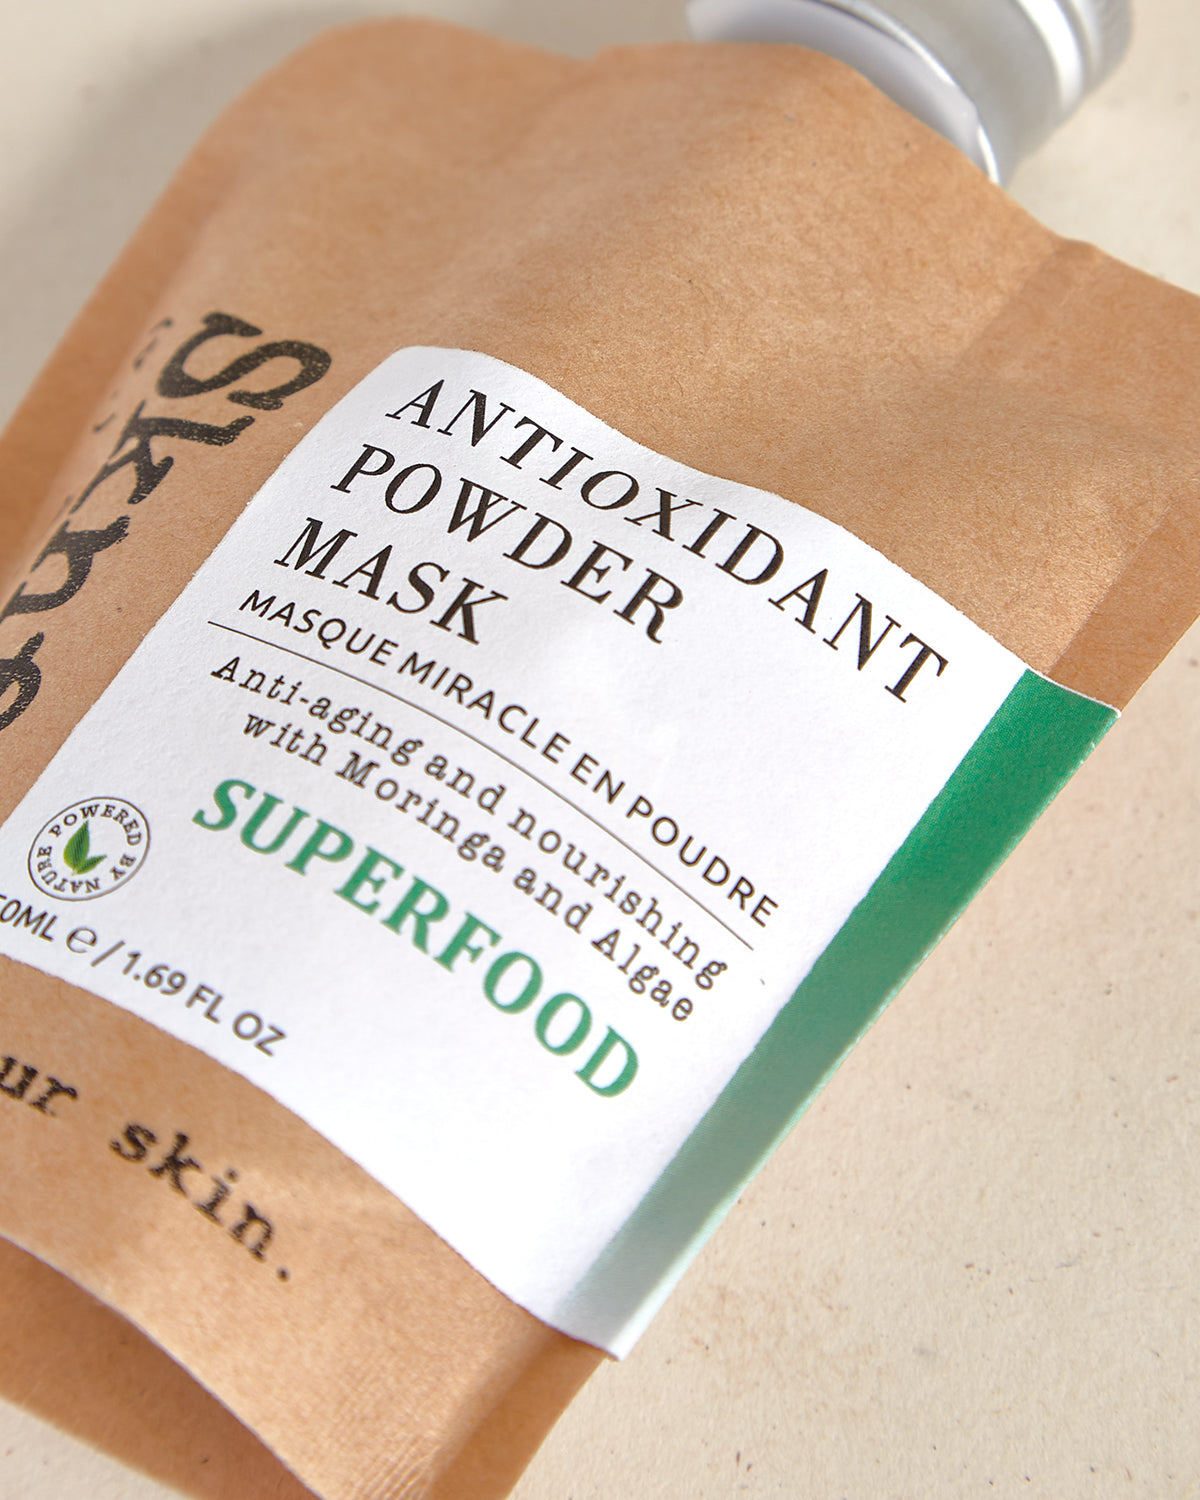 ANTIOXIDANT POWDER MASK - SUPERFOOD